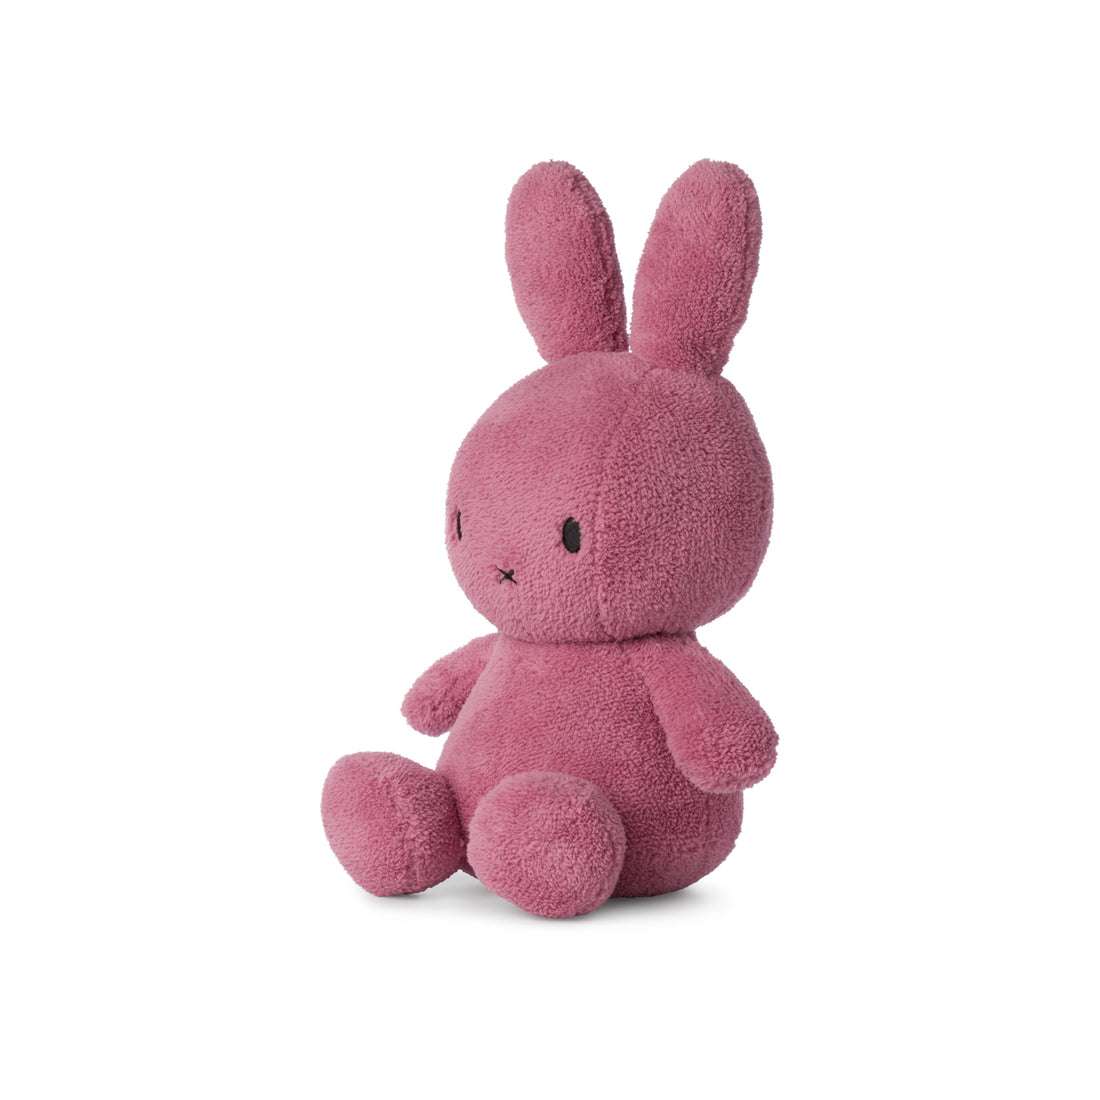 miffy-sitting-terry-raspberry-pink-33cm-miff-24182335- (2)